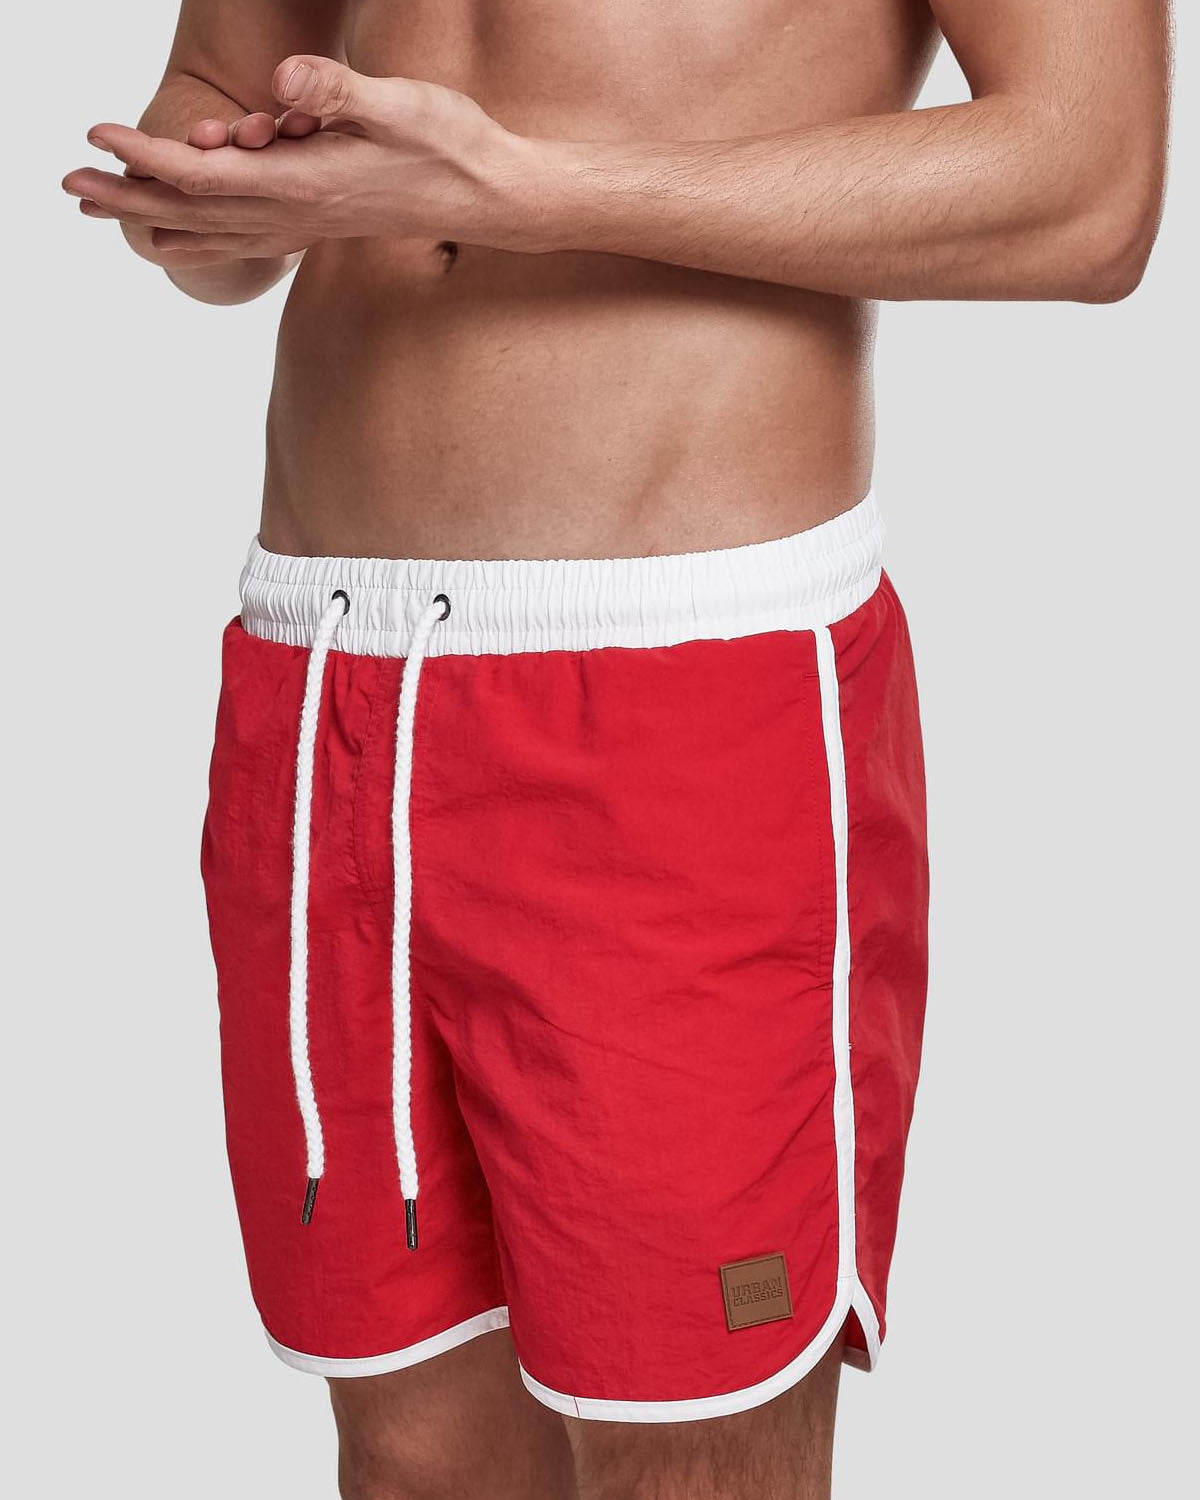 Retro swimming shorts - Red/White